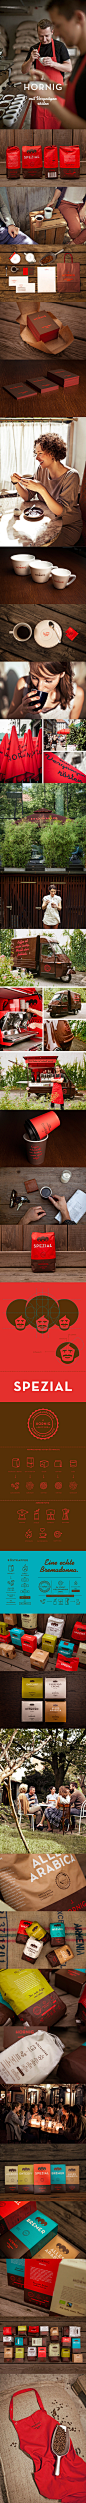 J. Hornig咖啡品牌设计案例&咖啡包装设计欣赏,咖啡品牌设计案例，咖啡品牌logo设计，咖啡纸